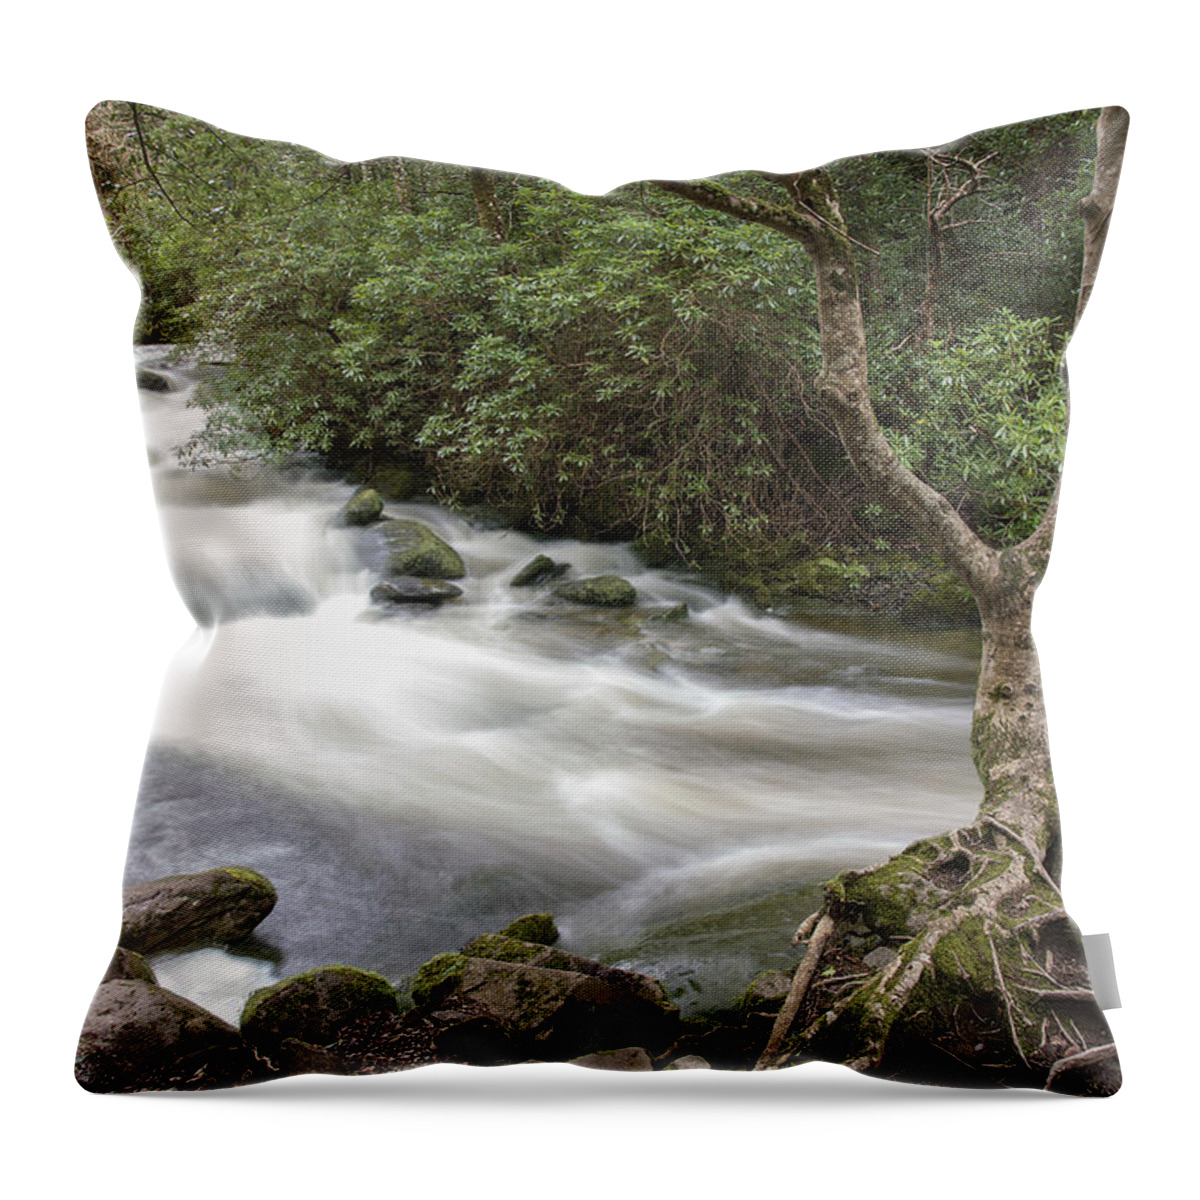 Original Throw Pillow featuring the photograph Stream below Torc Waterfall Killarney National Park by WAZgriffin Digital